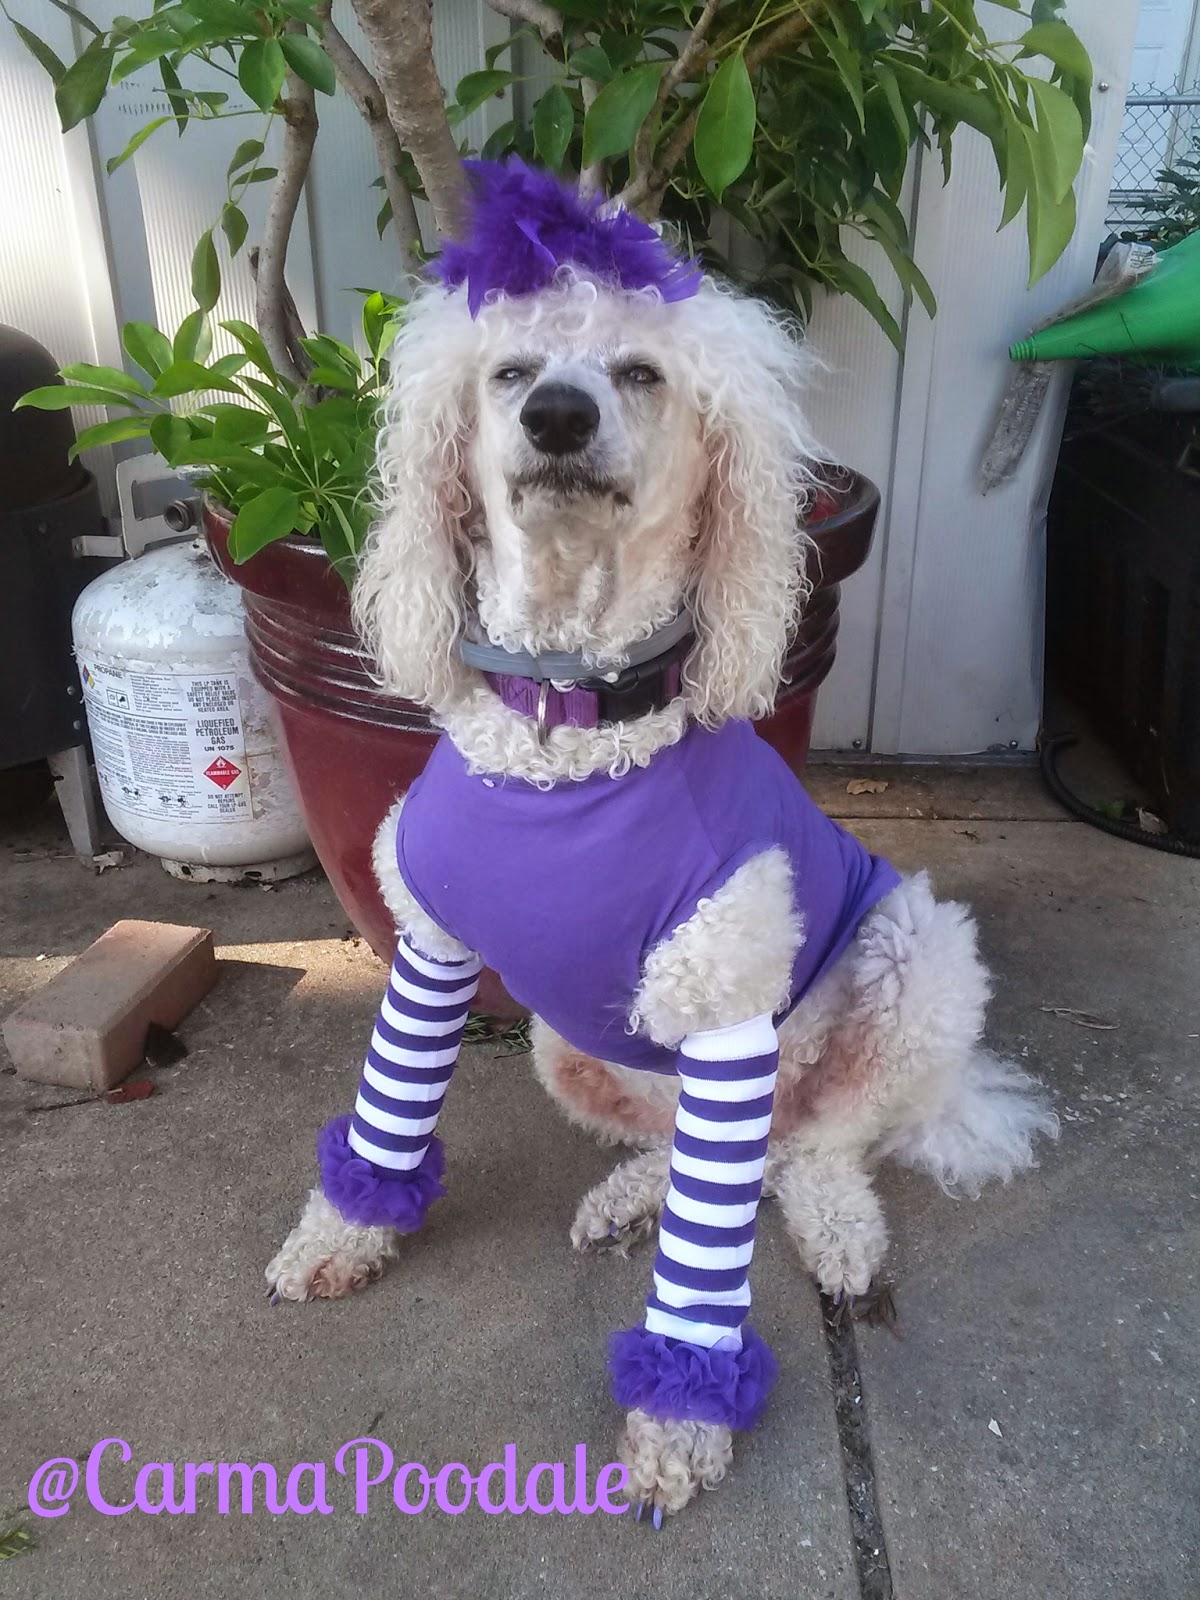 Poodle dressed in purple